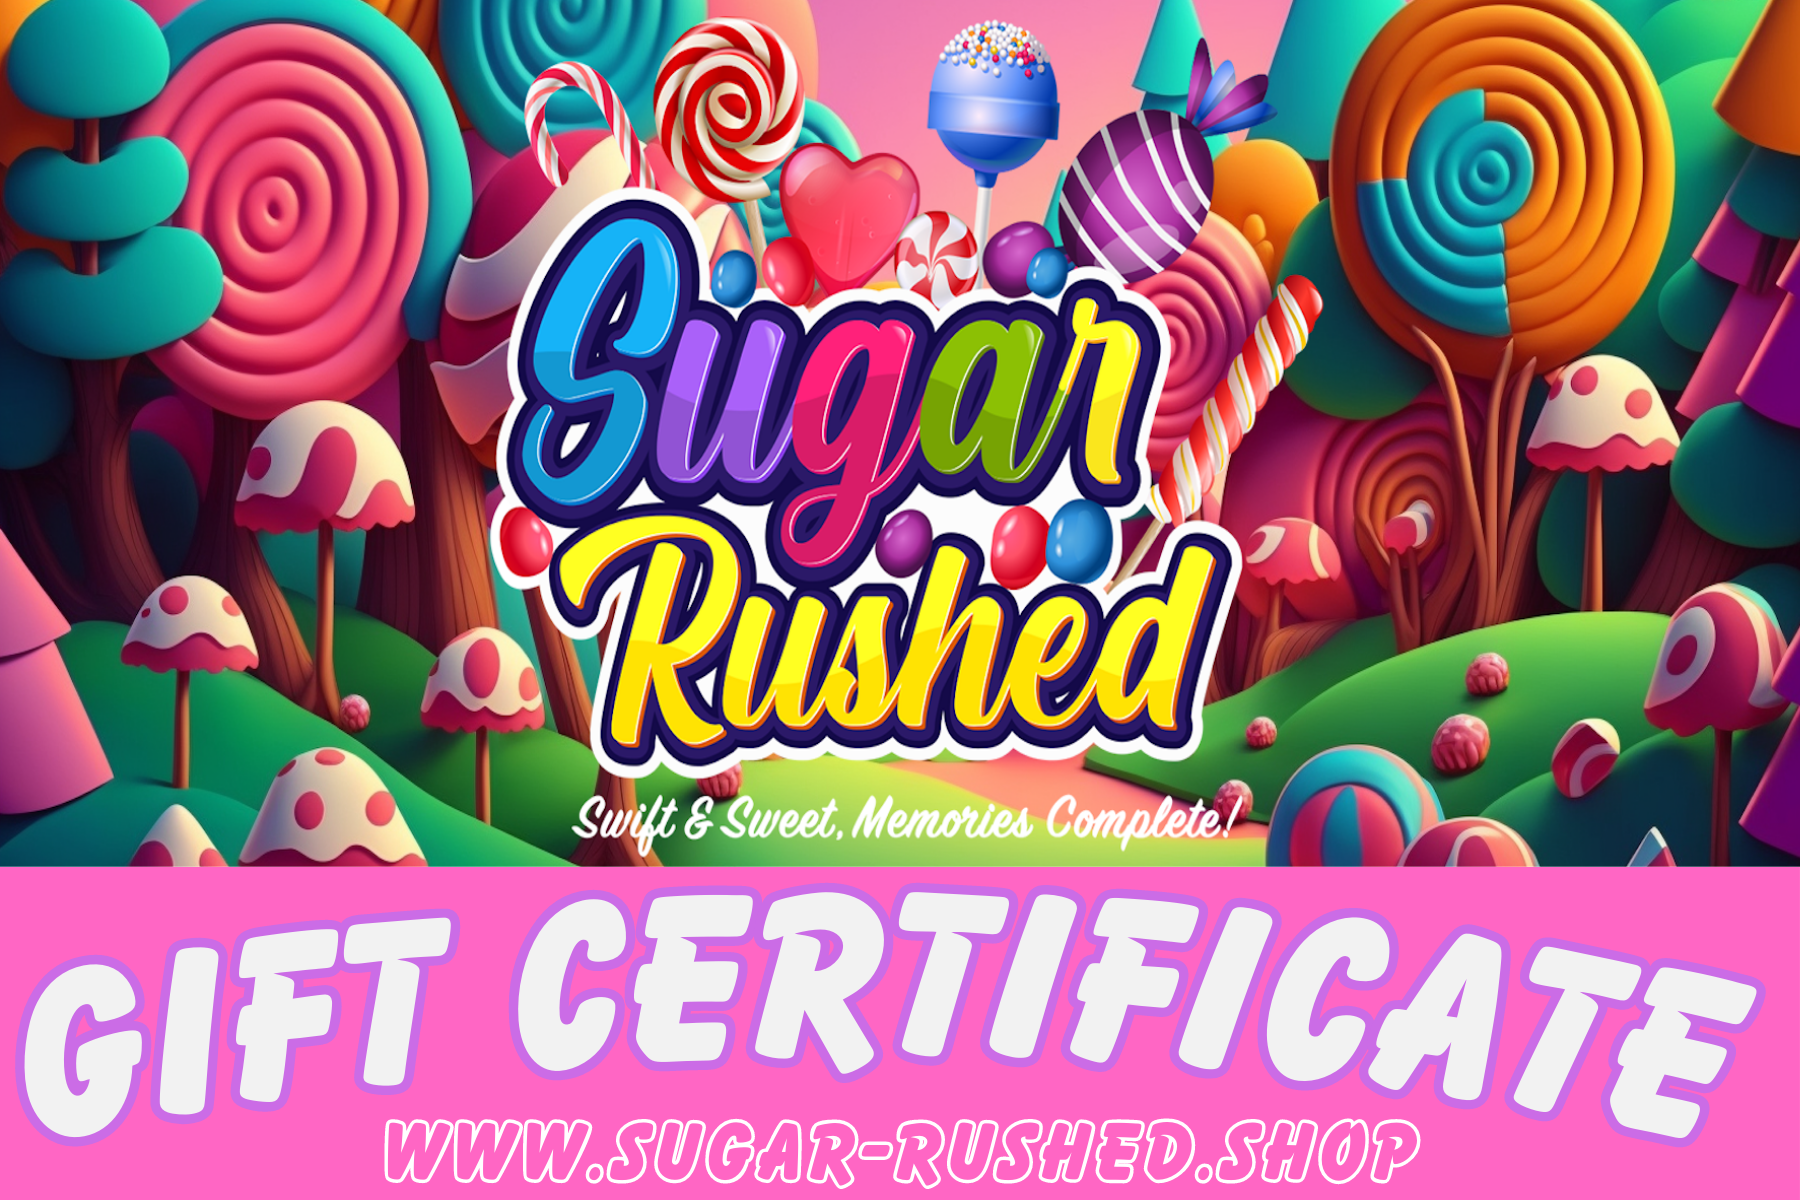 Sugar Rushed Gift Certificate - Sugar Rushed